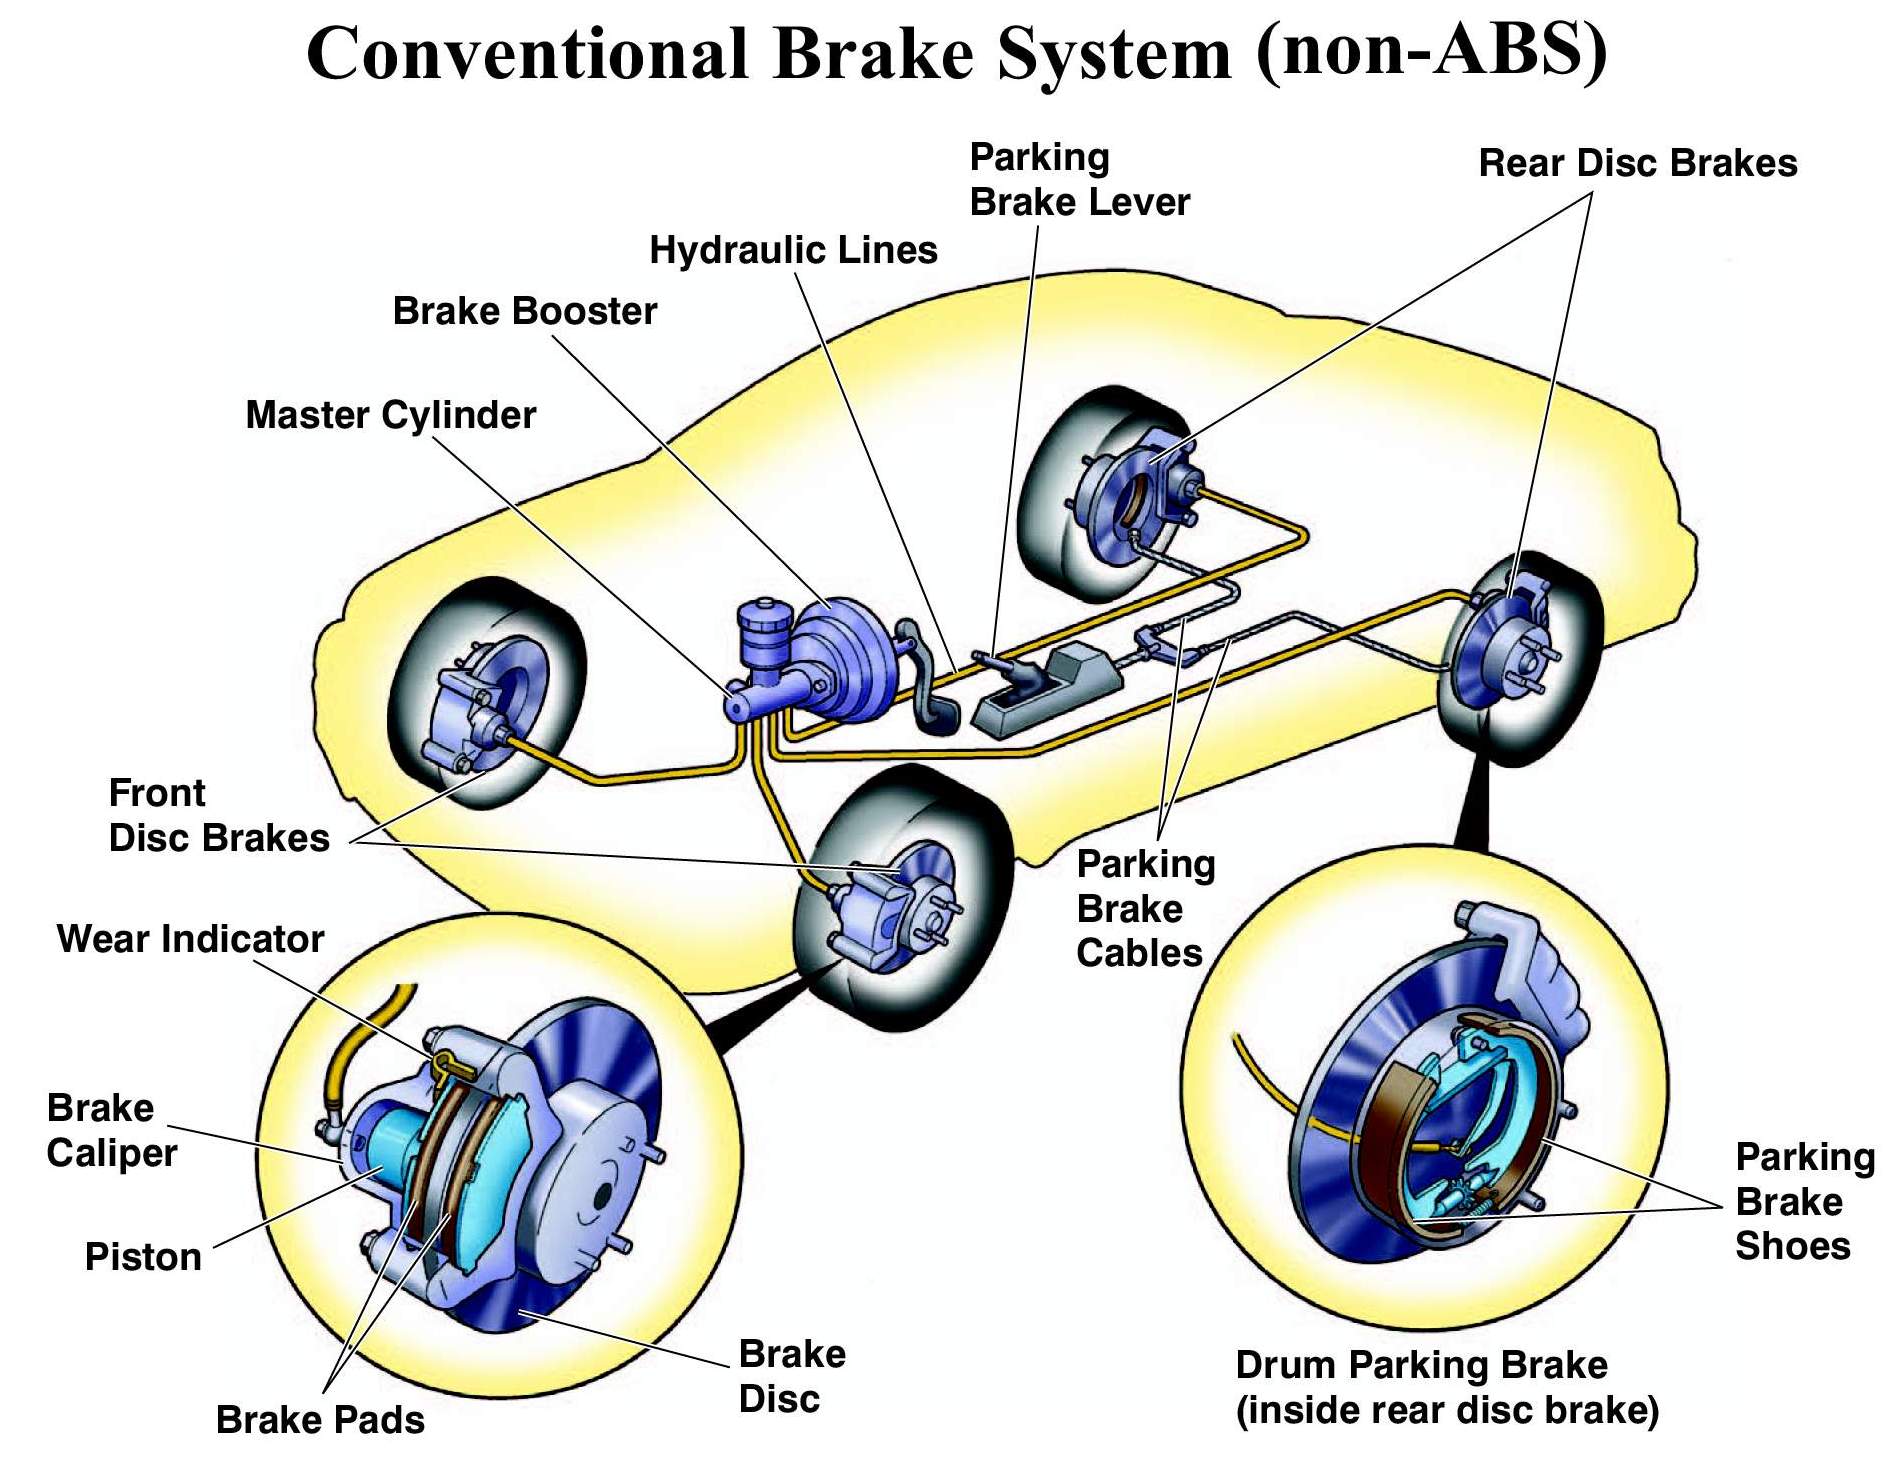 Conventional Brake System